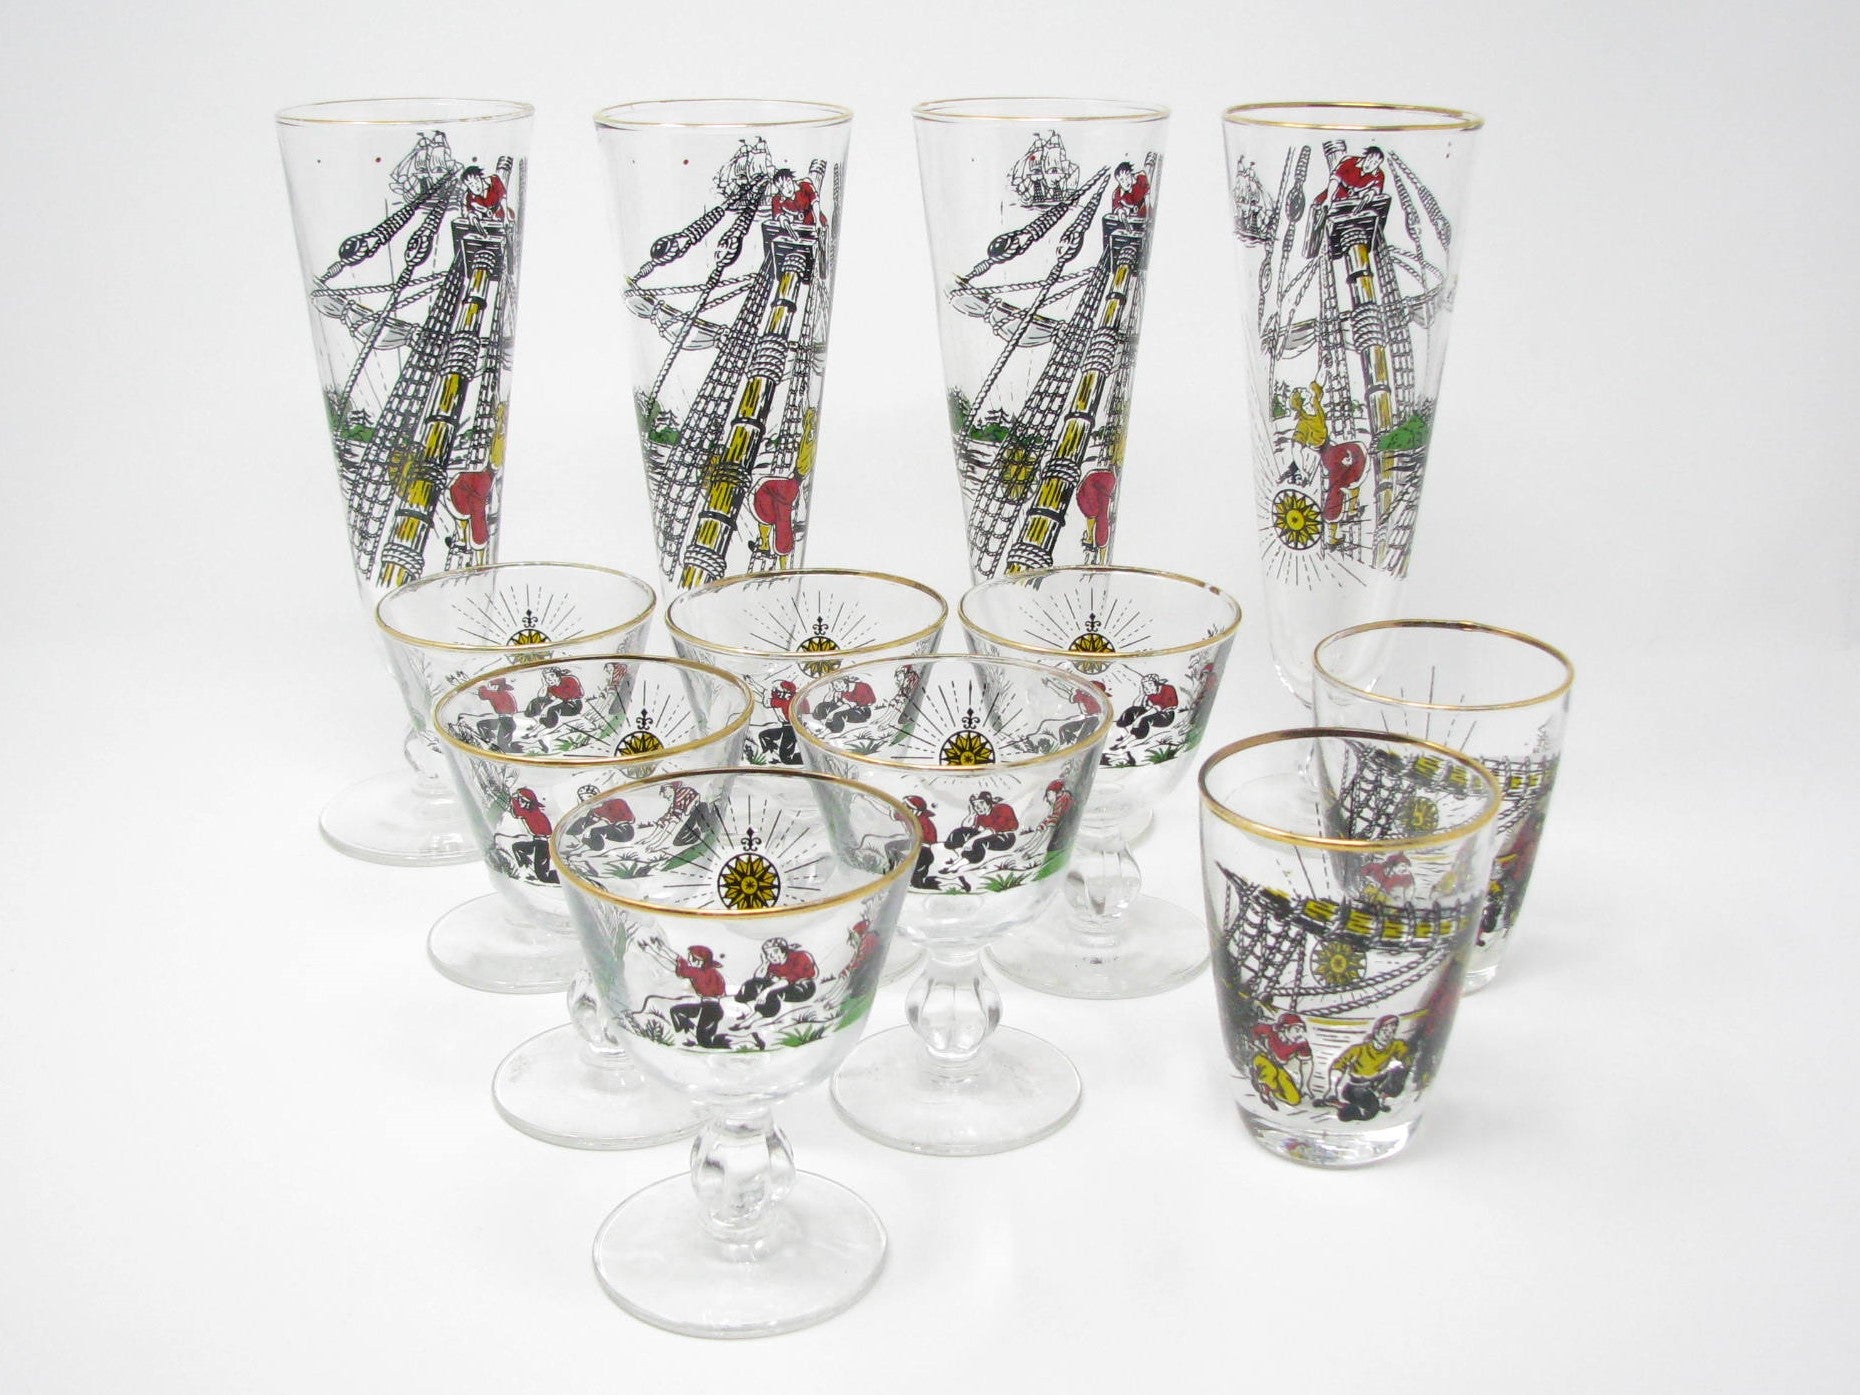 Libbey Margarita Glasses set of 12 (NEW IN BOX)